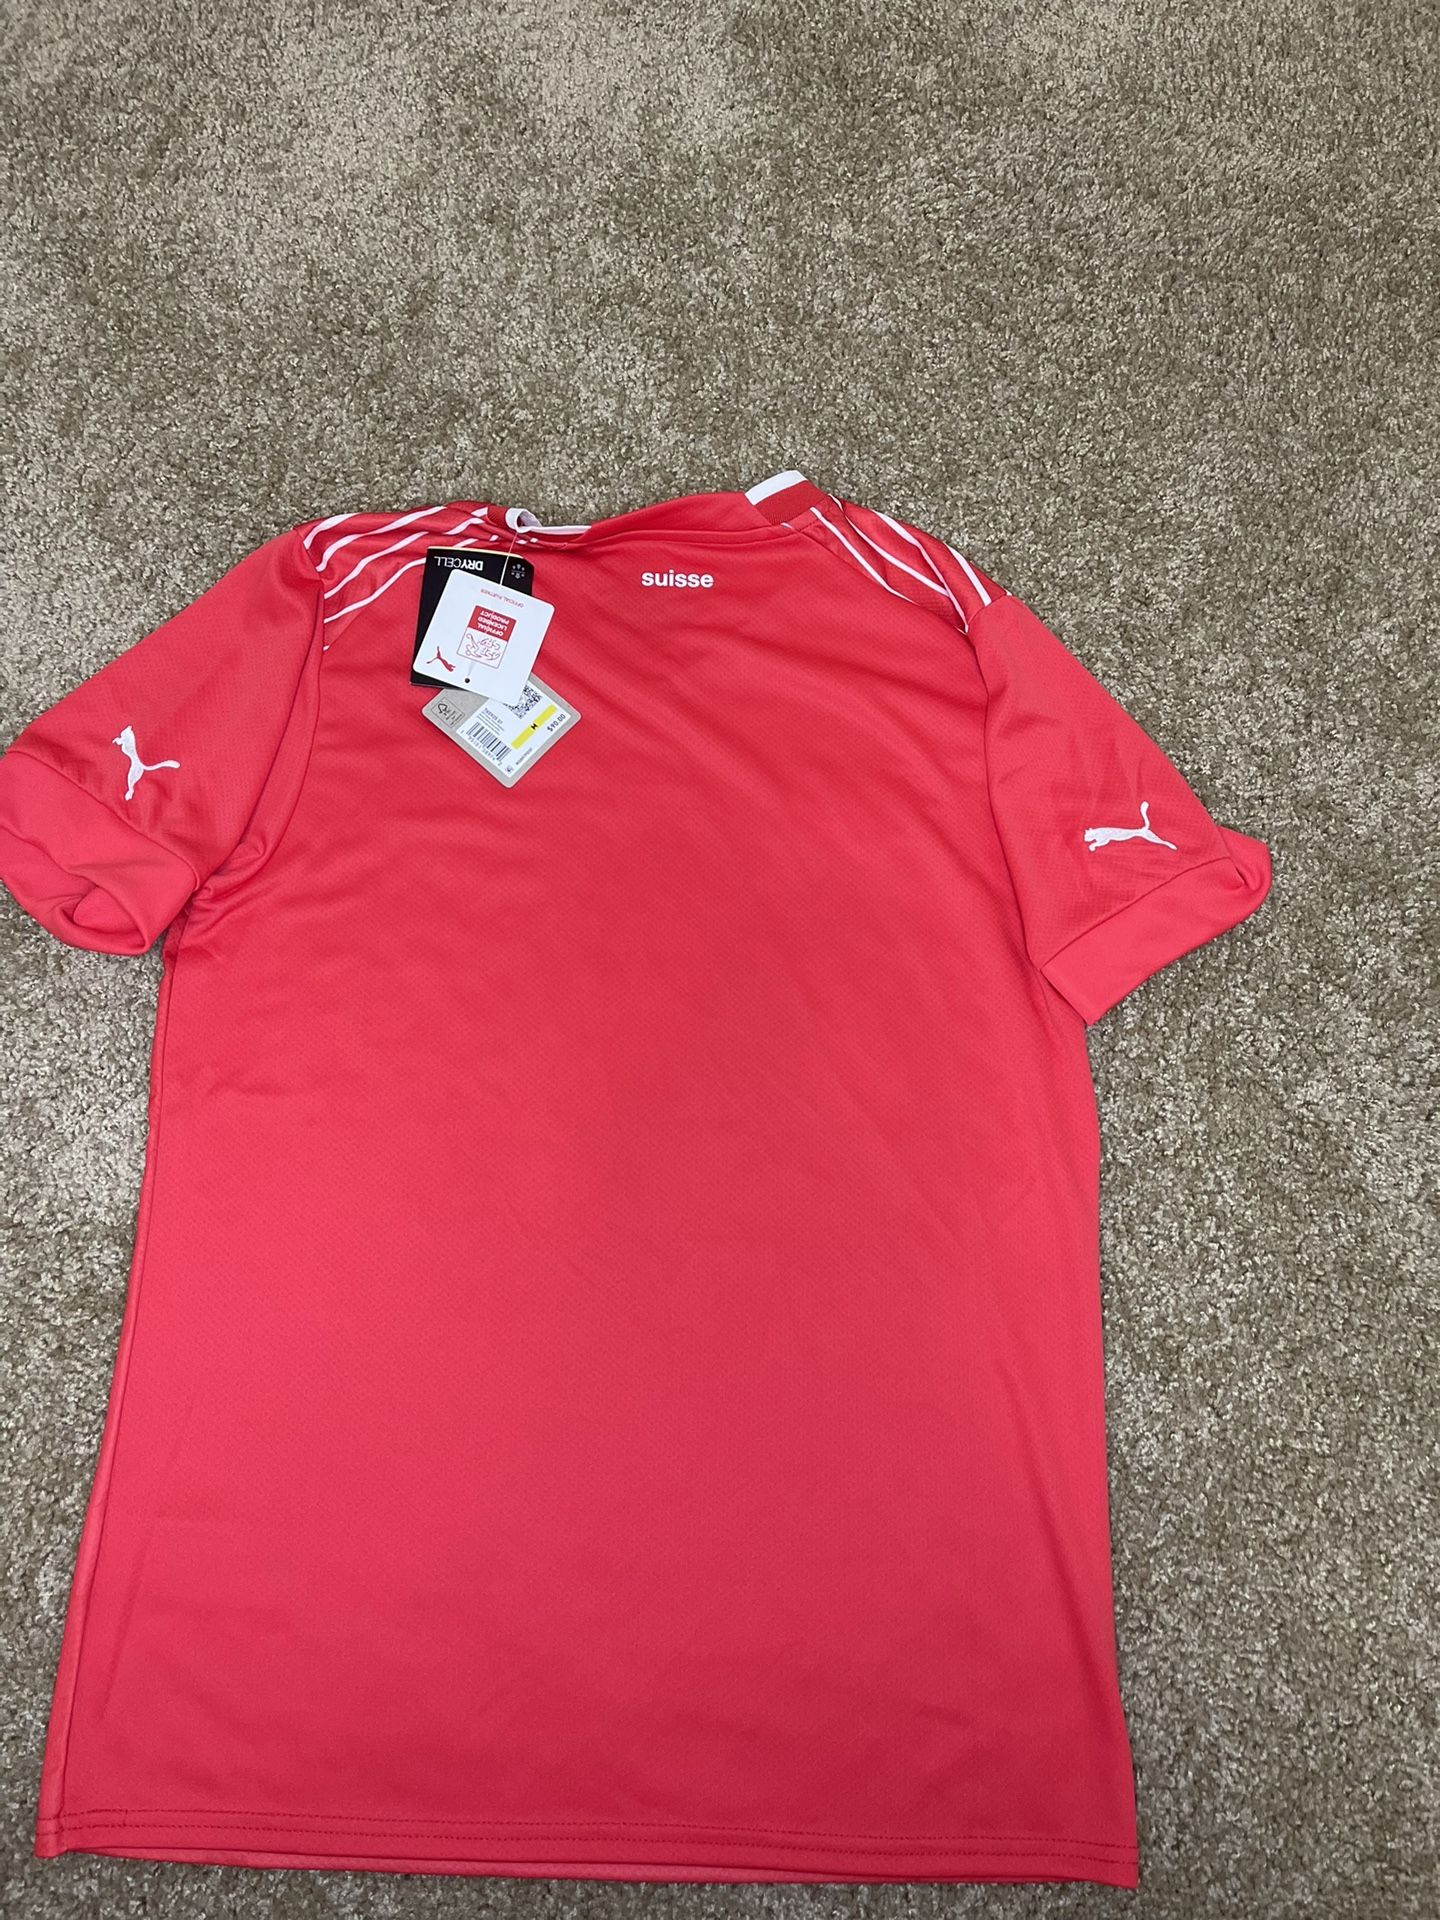 Switzerland National Team Puma 2022/23 Home Jersey - Red